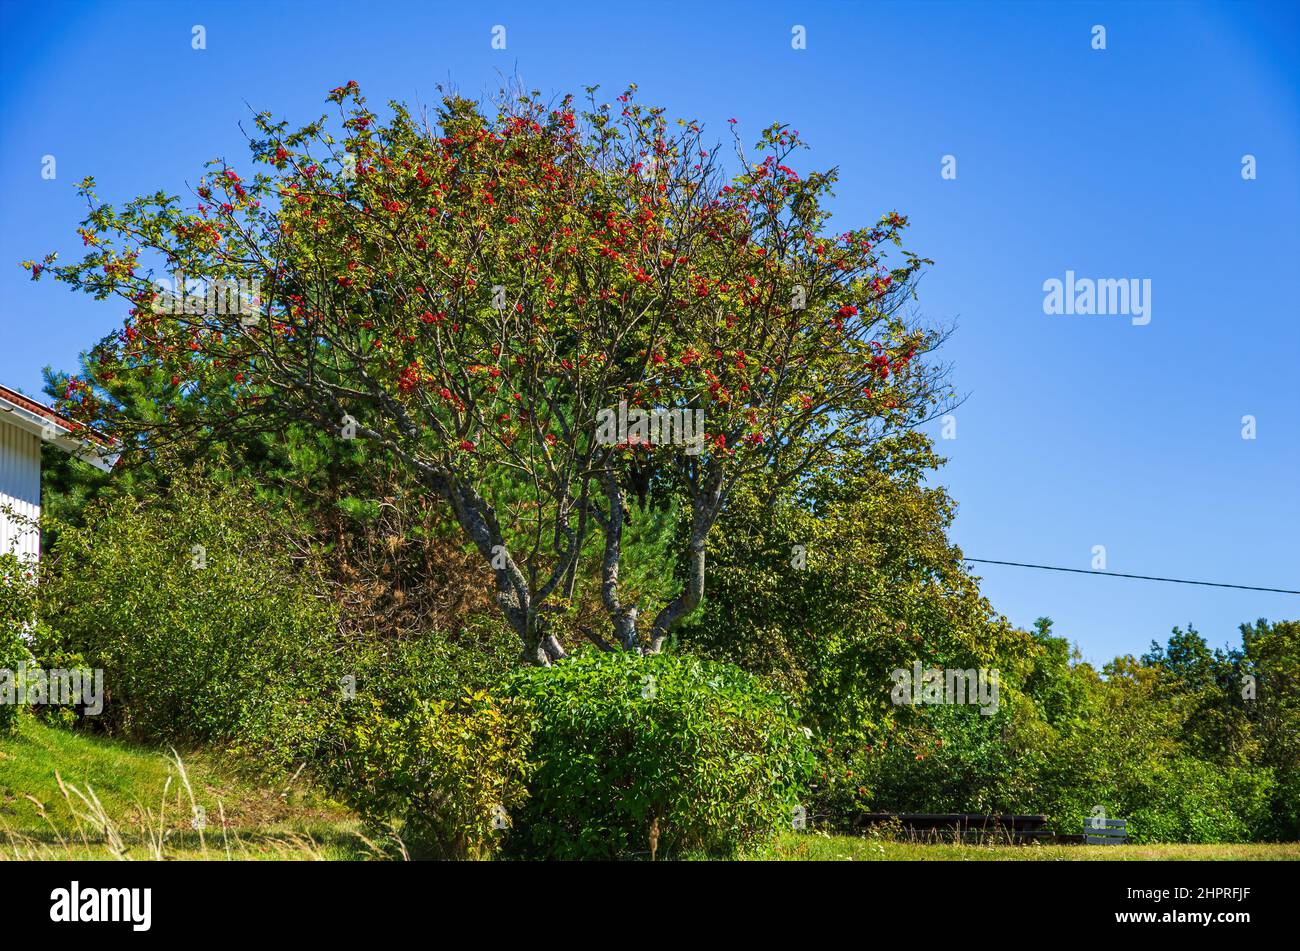 Rowan tree or mountain ash, Sorbus aucuparia, full of ripe rowan berries in a front garden. Stock Photo